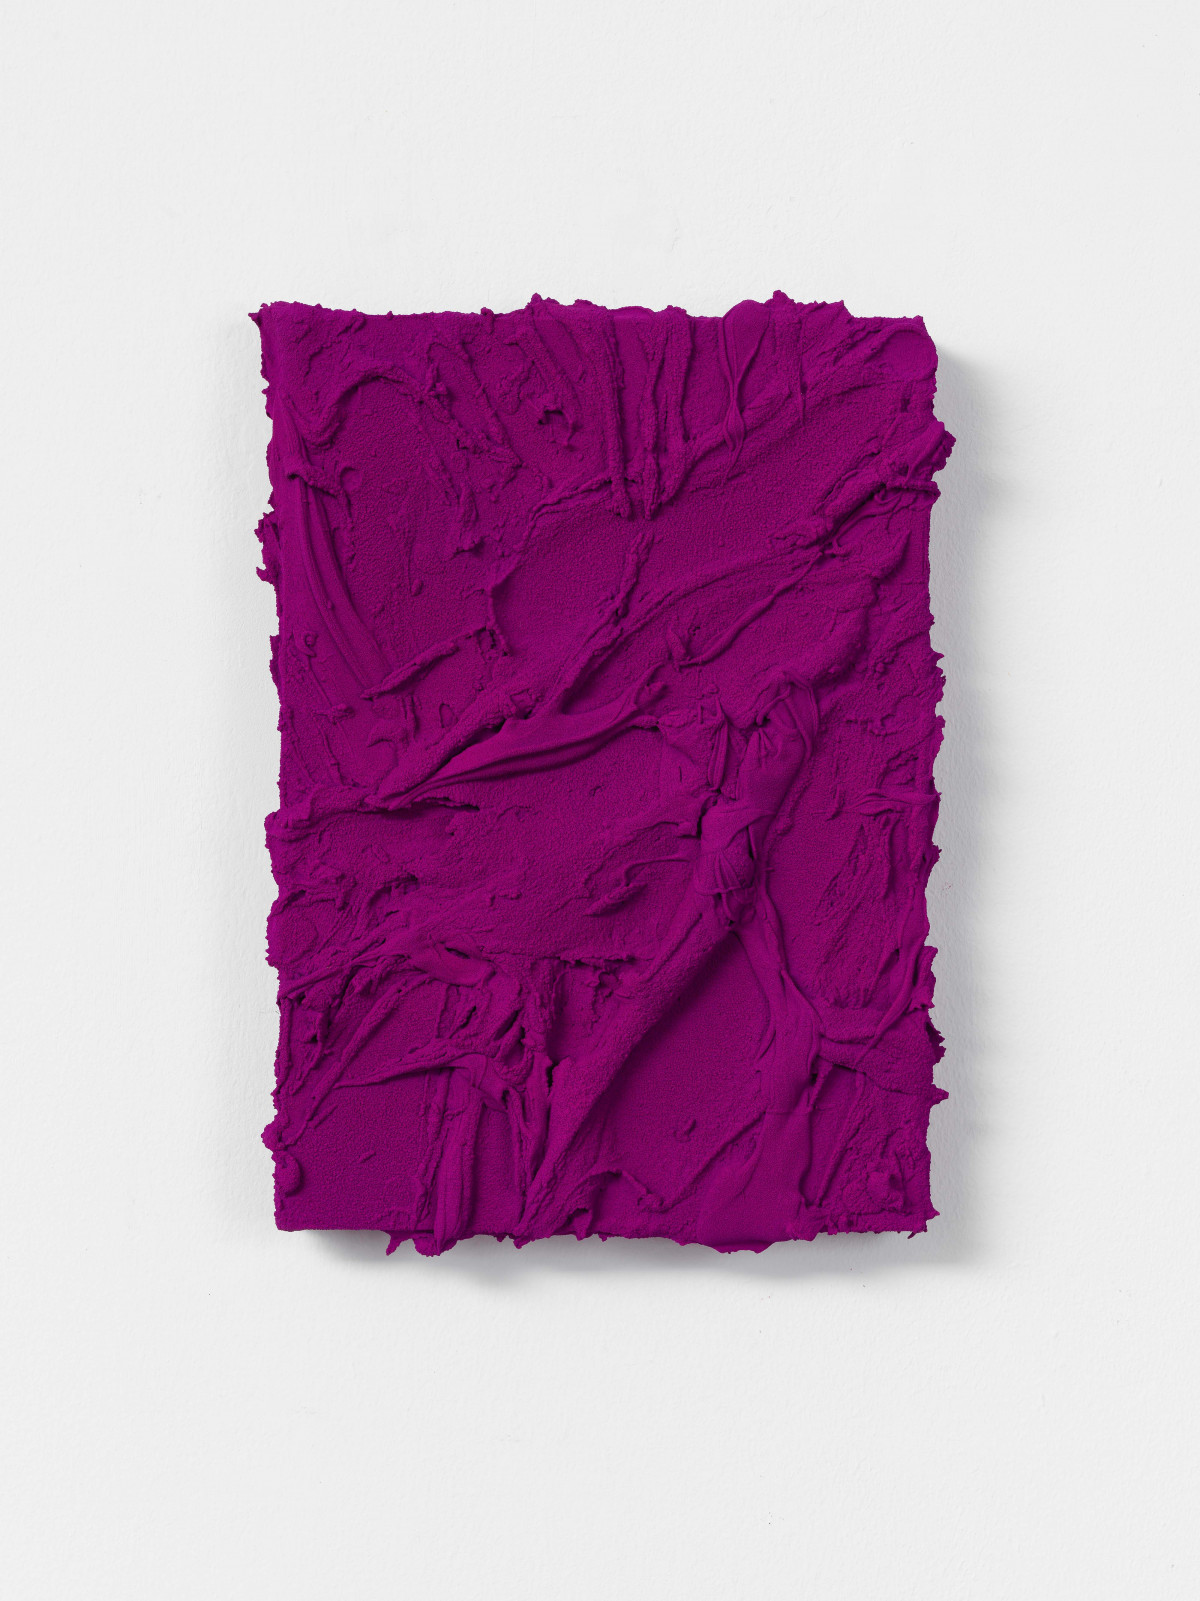 Jason Martin, ‘Untitled (Fluorescent violet)’, 2021, Mischtechnik auf Aluminium